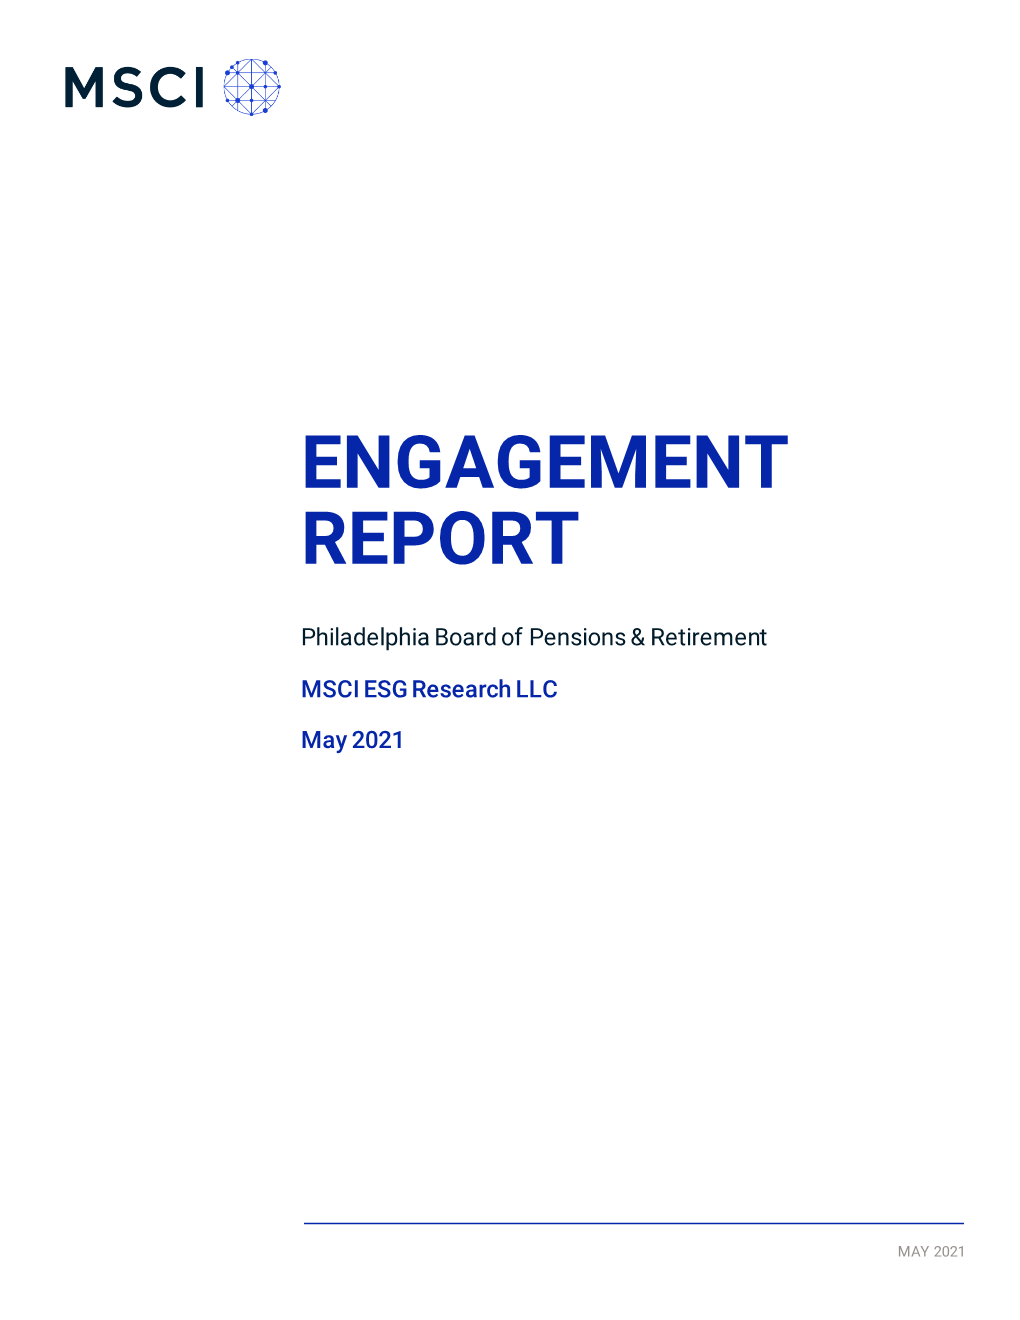 Engagement Report